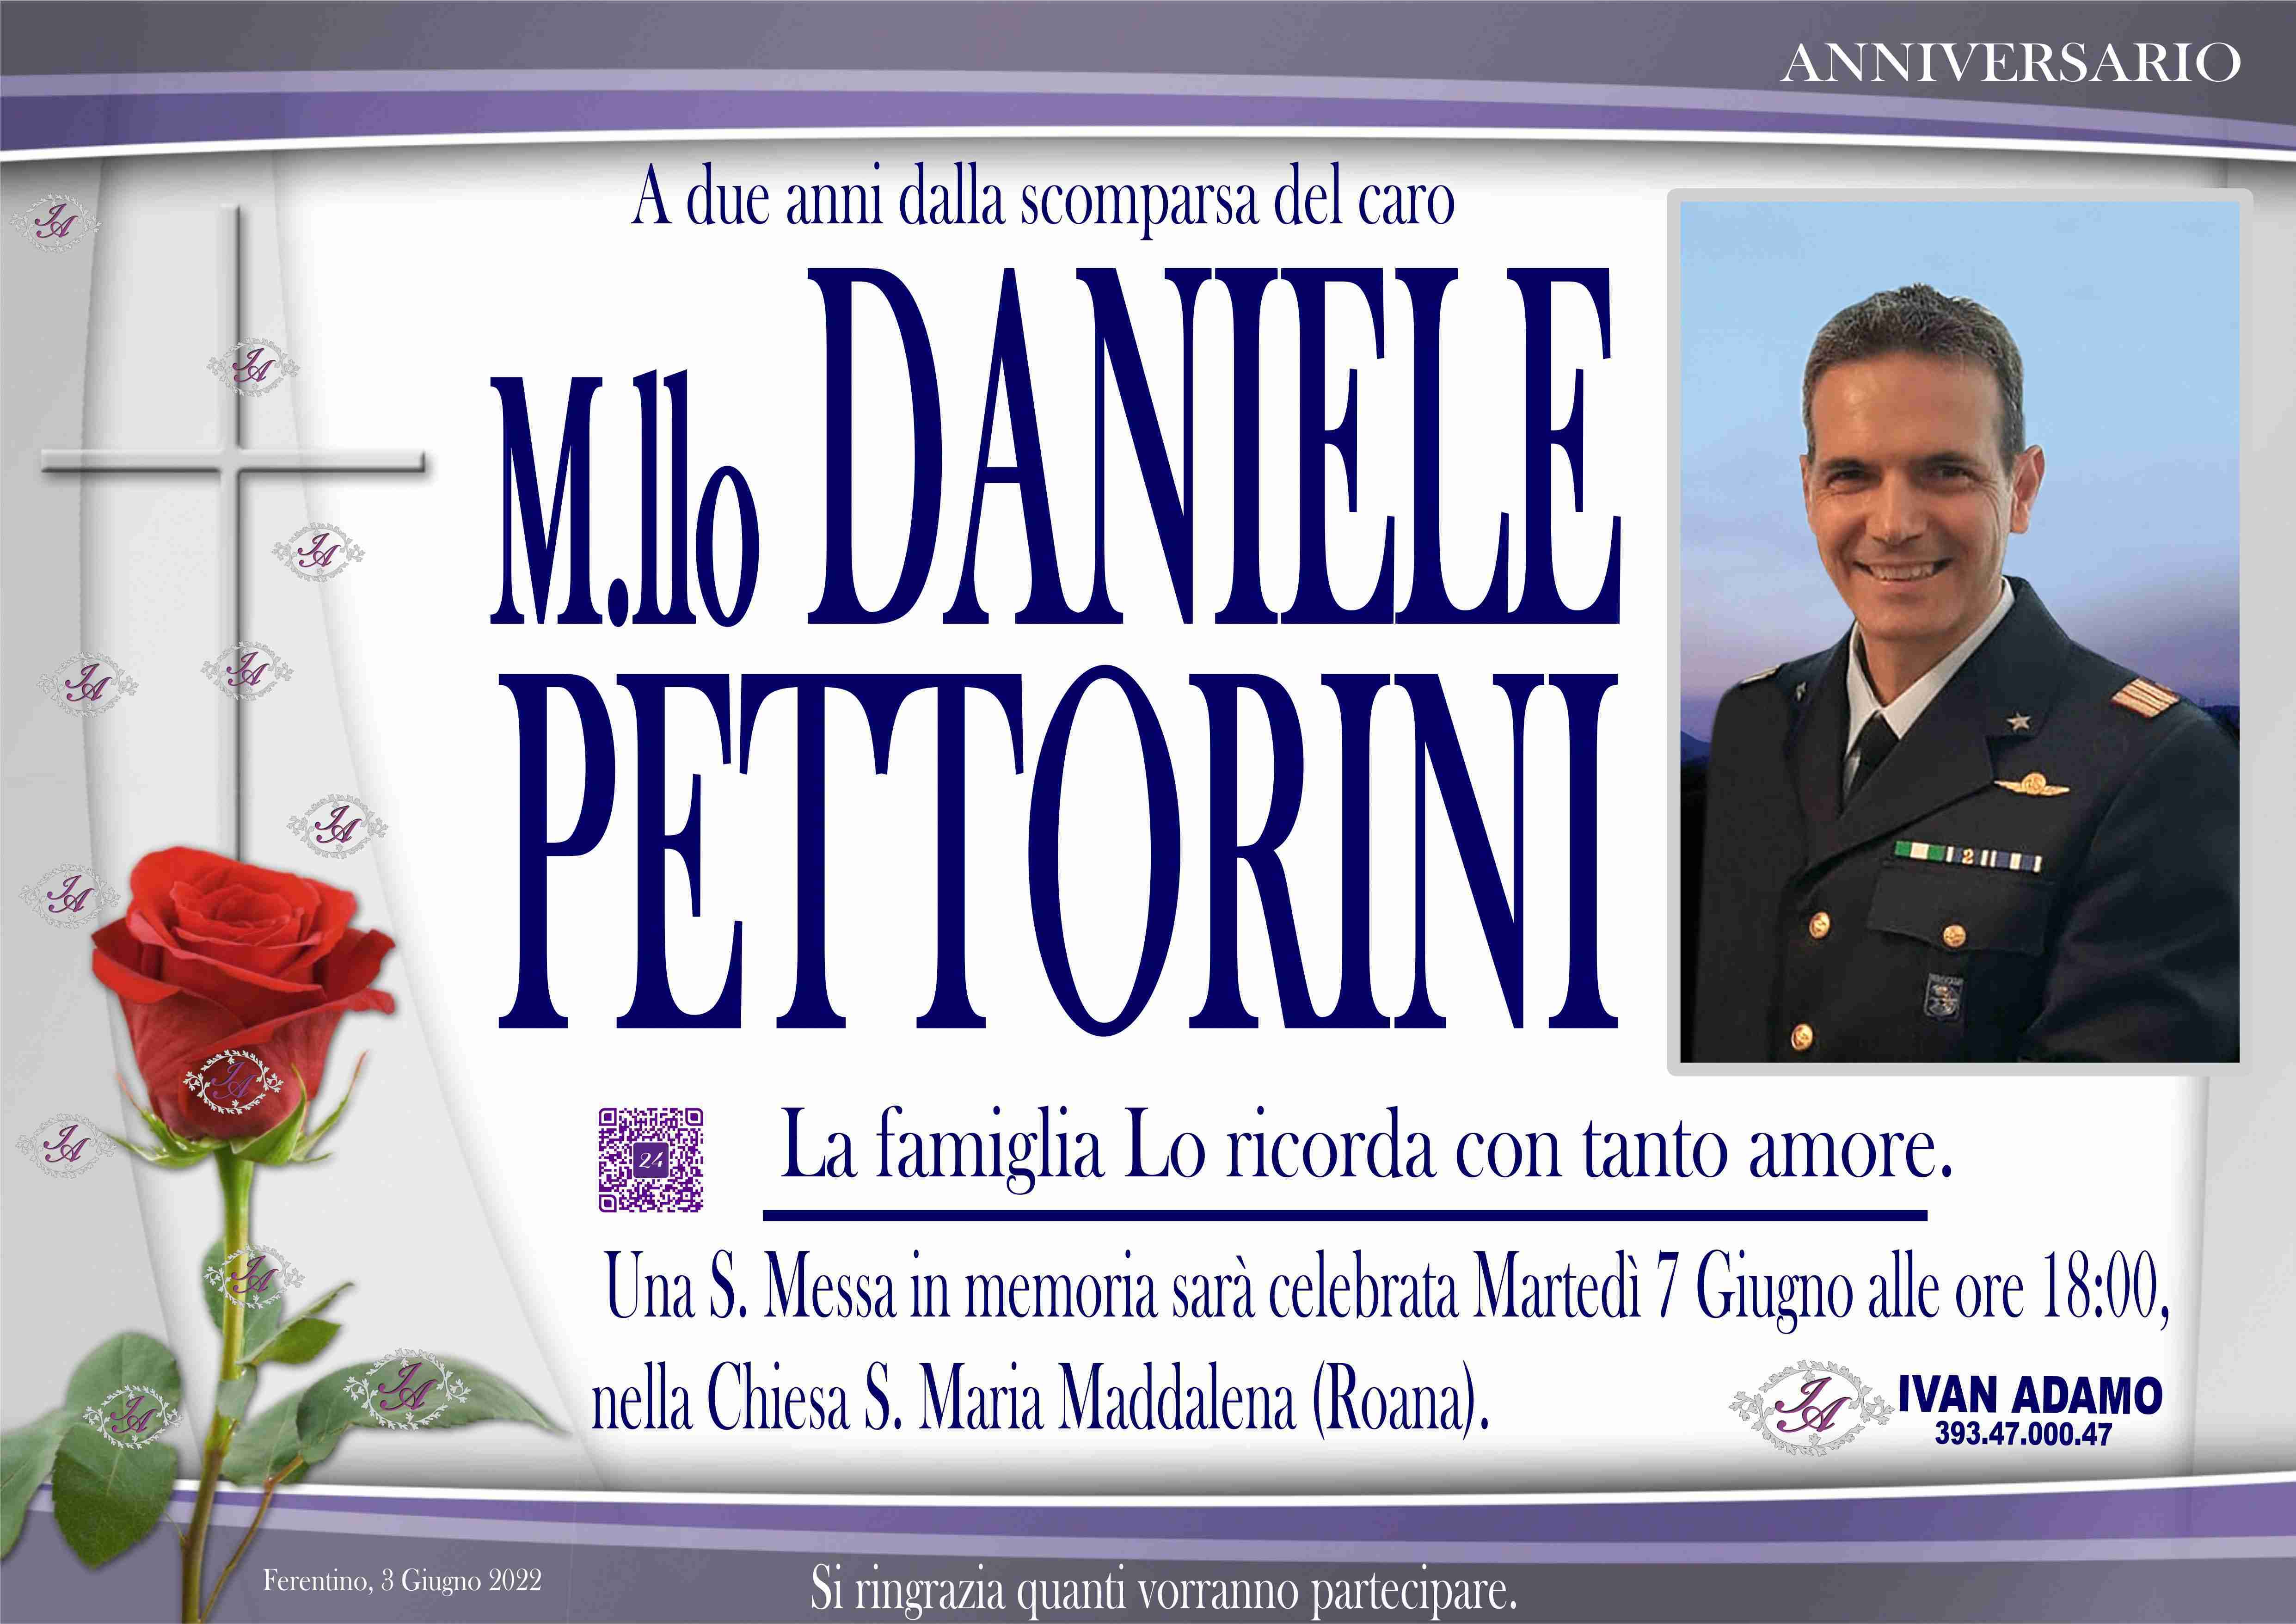 Daniele Pettorini